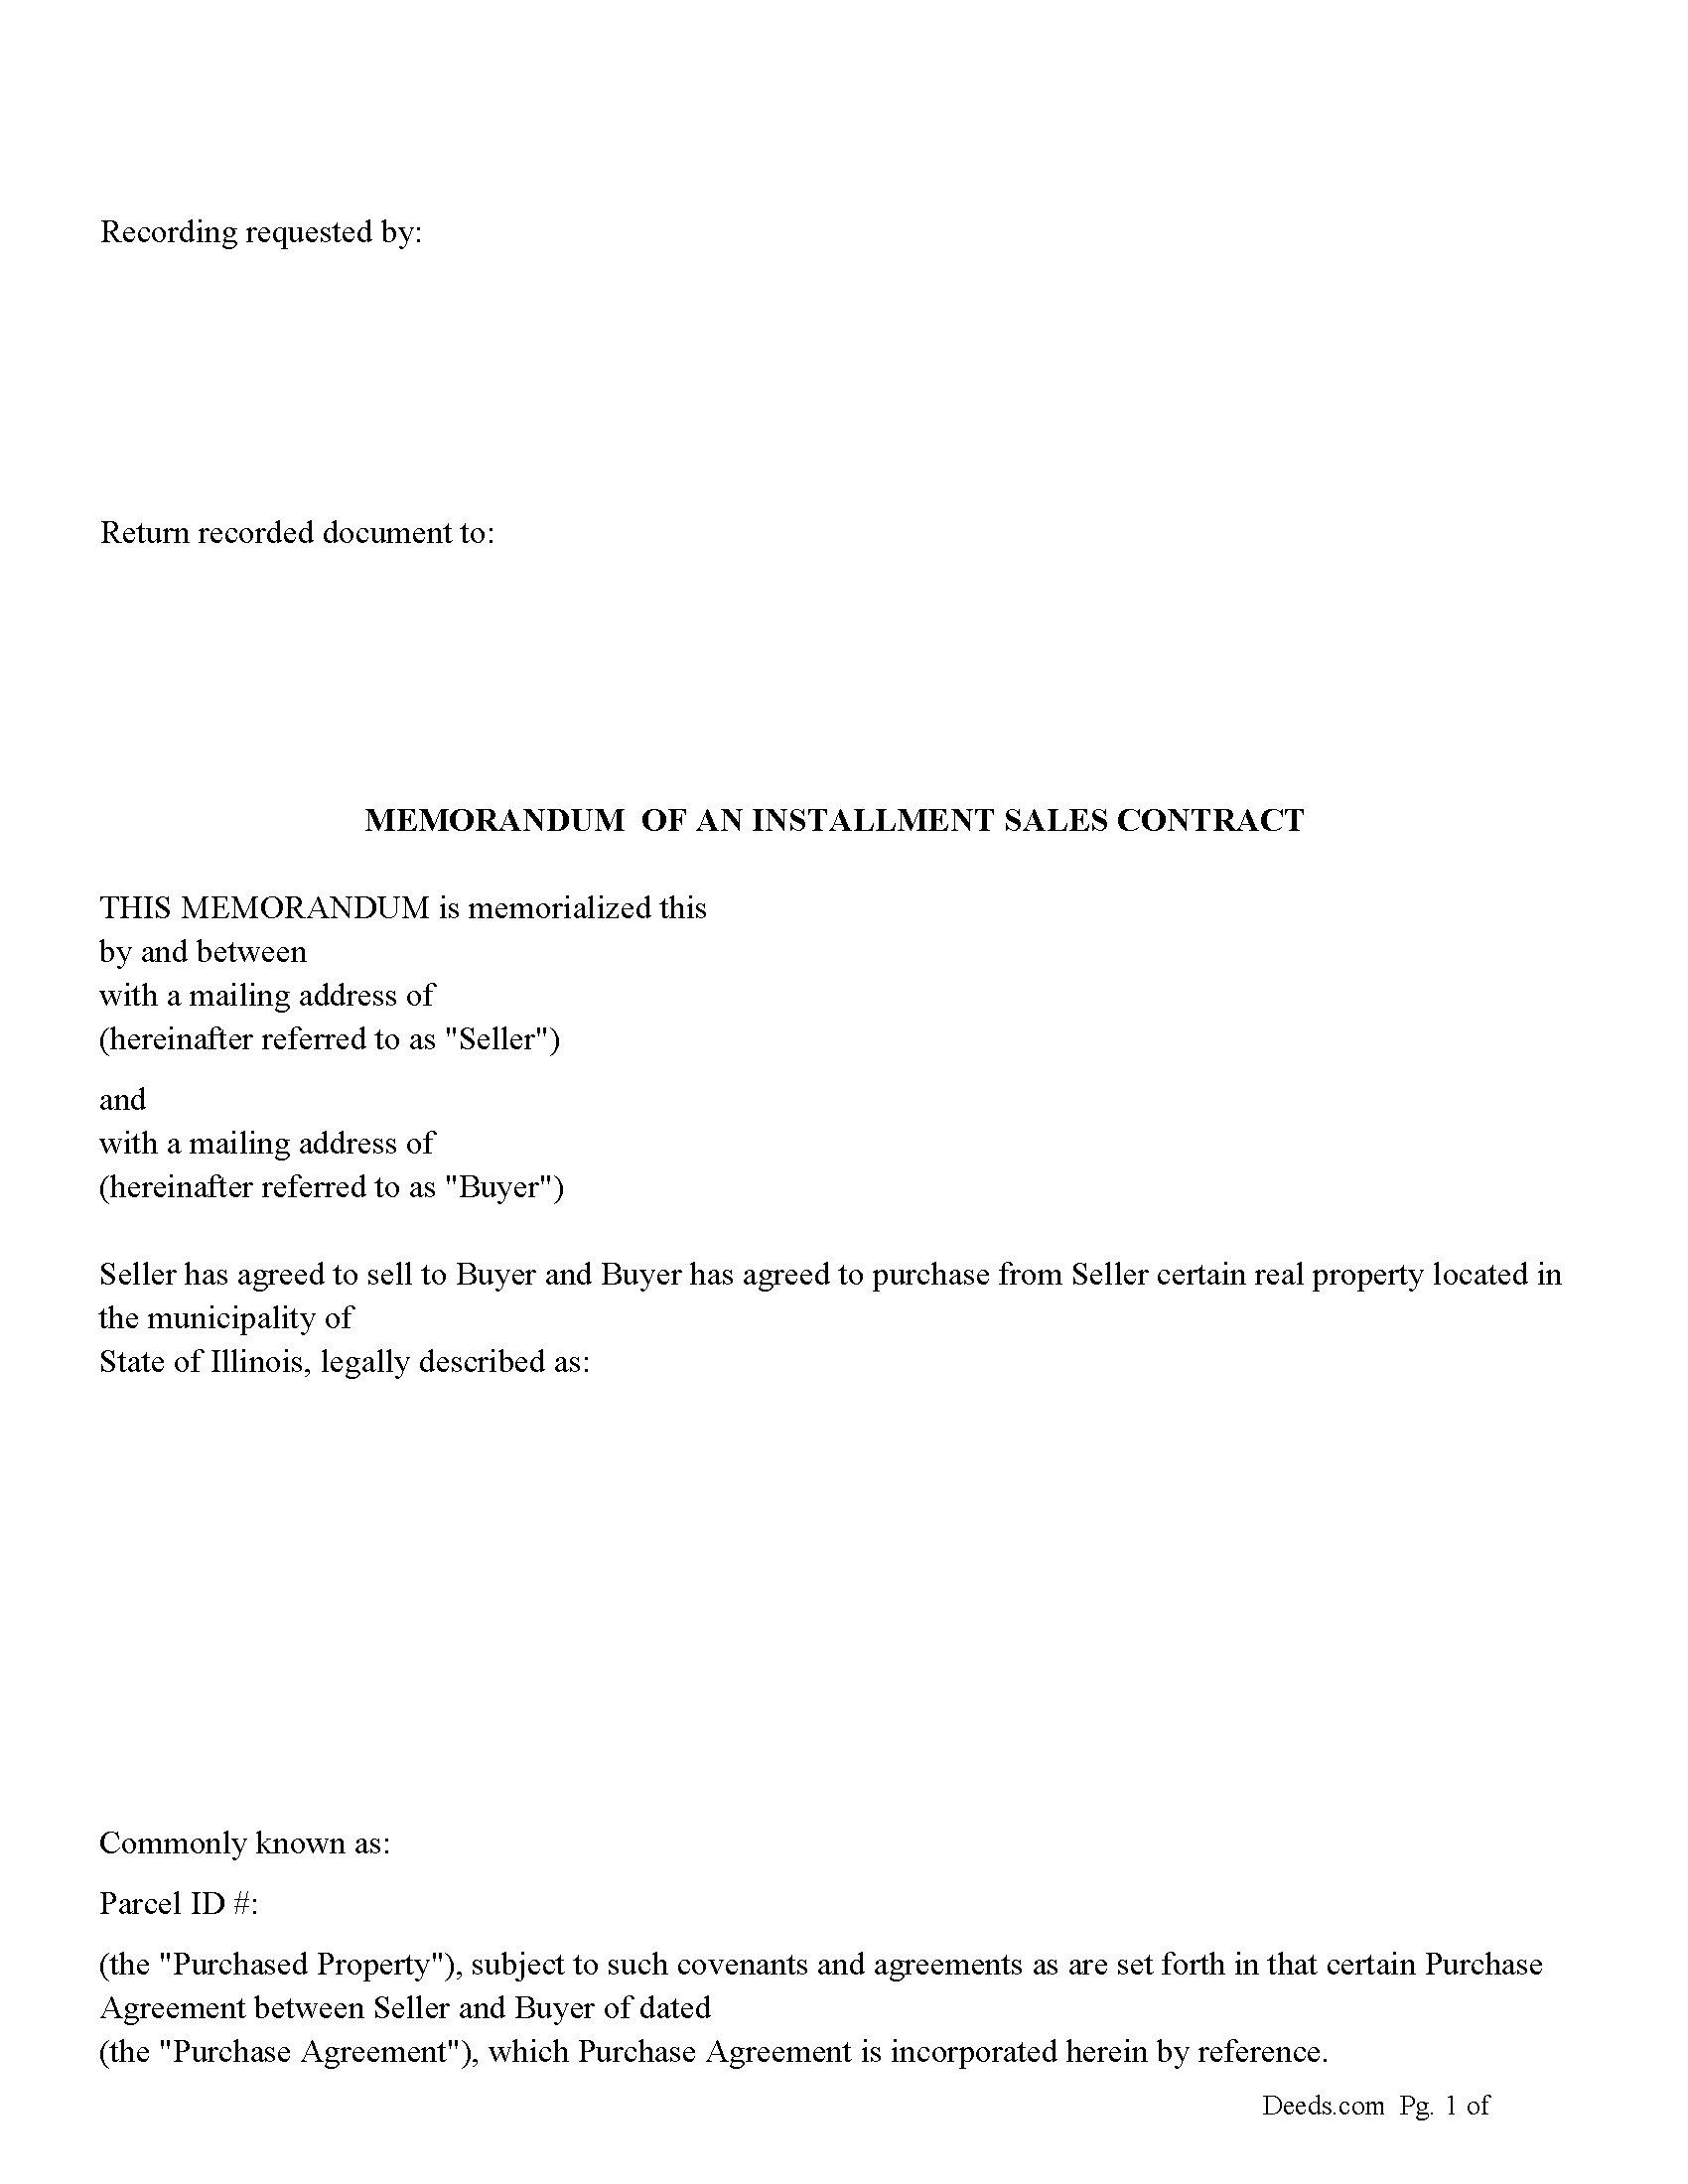 Clay County Memorandum of an Installment Sales Contract Form